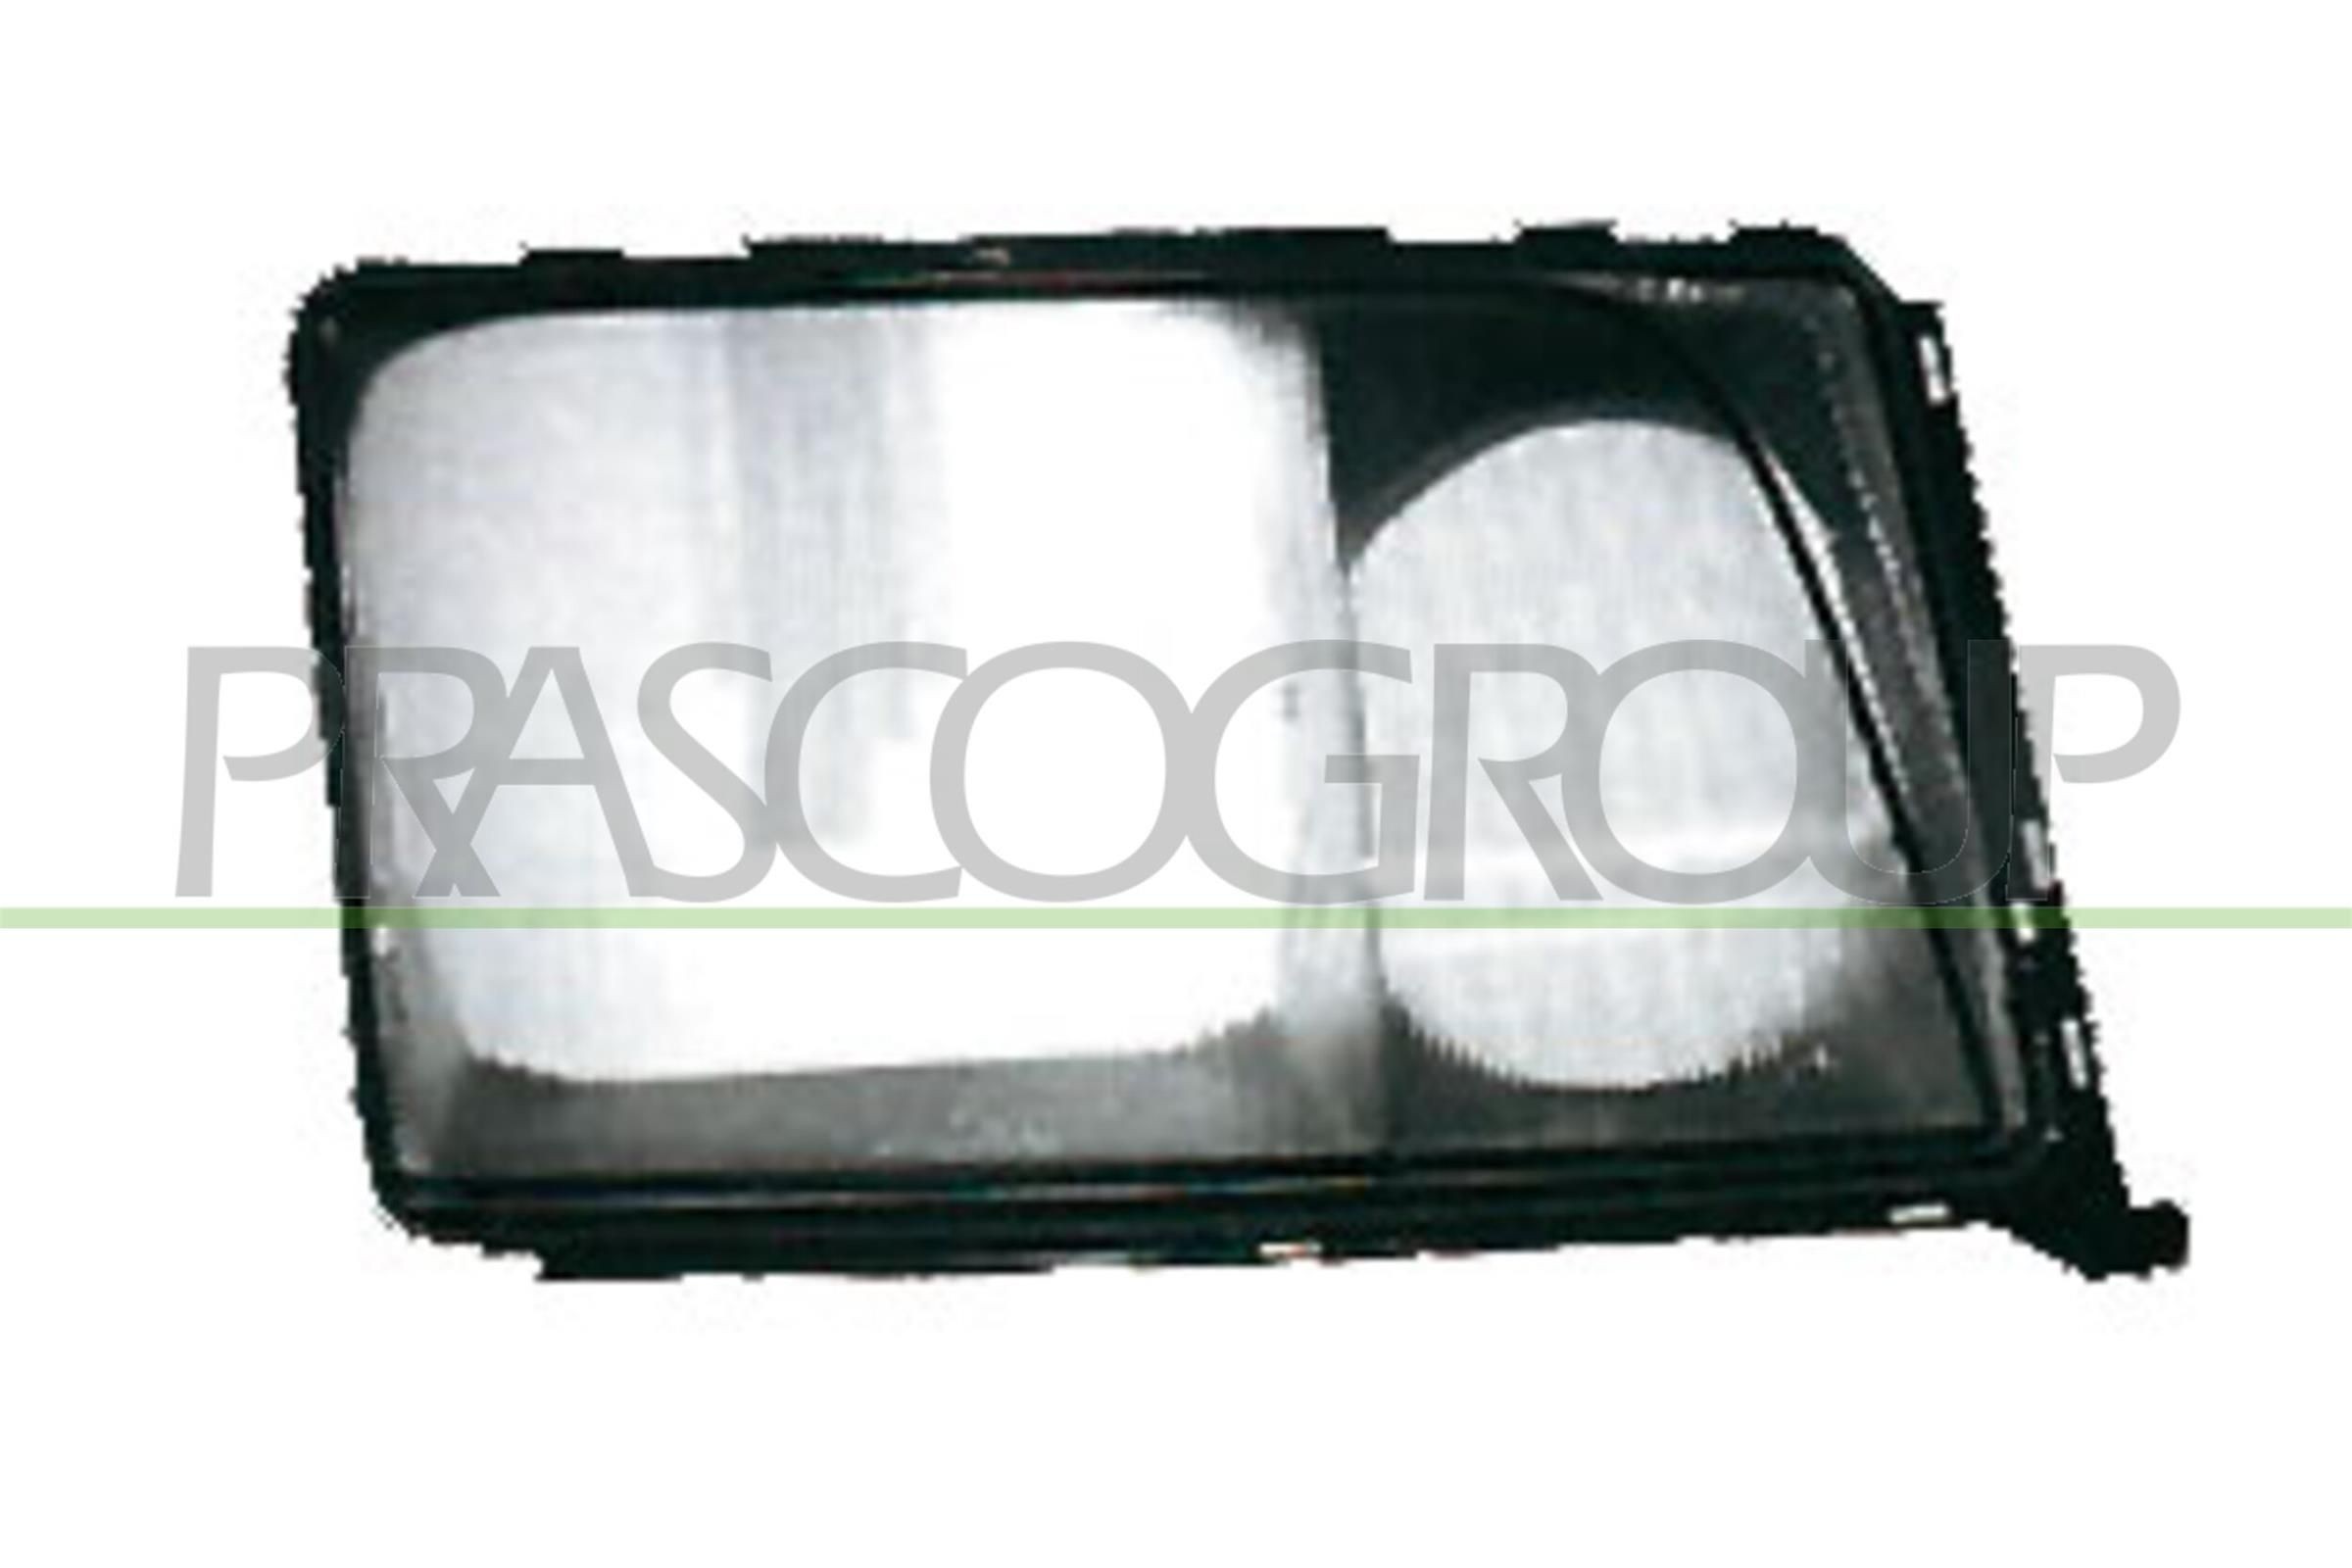 original Mercedes A124 Headlight parts PRASCO ME0335004